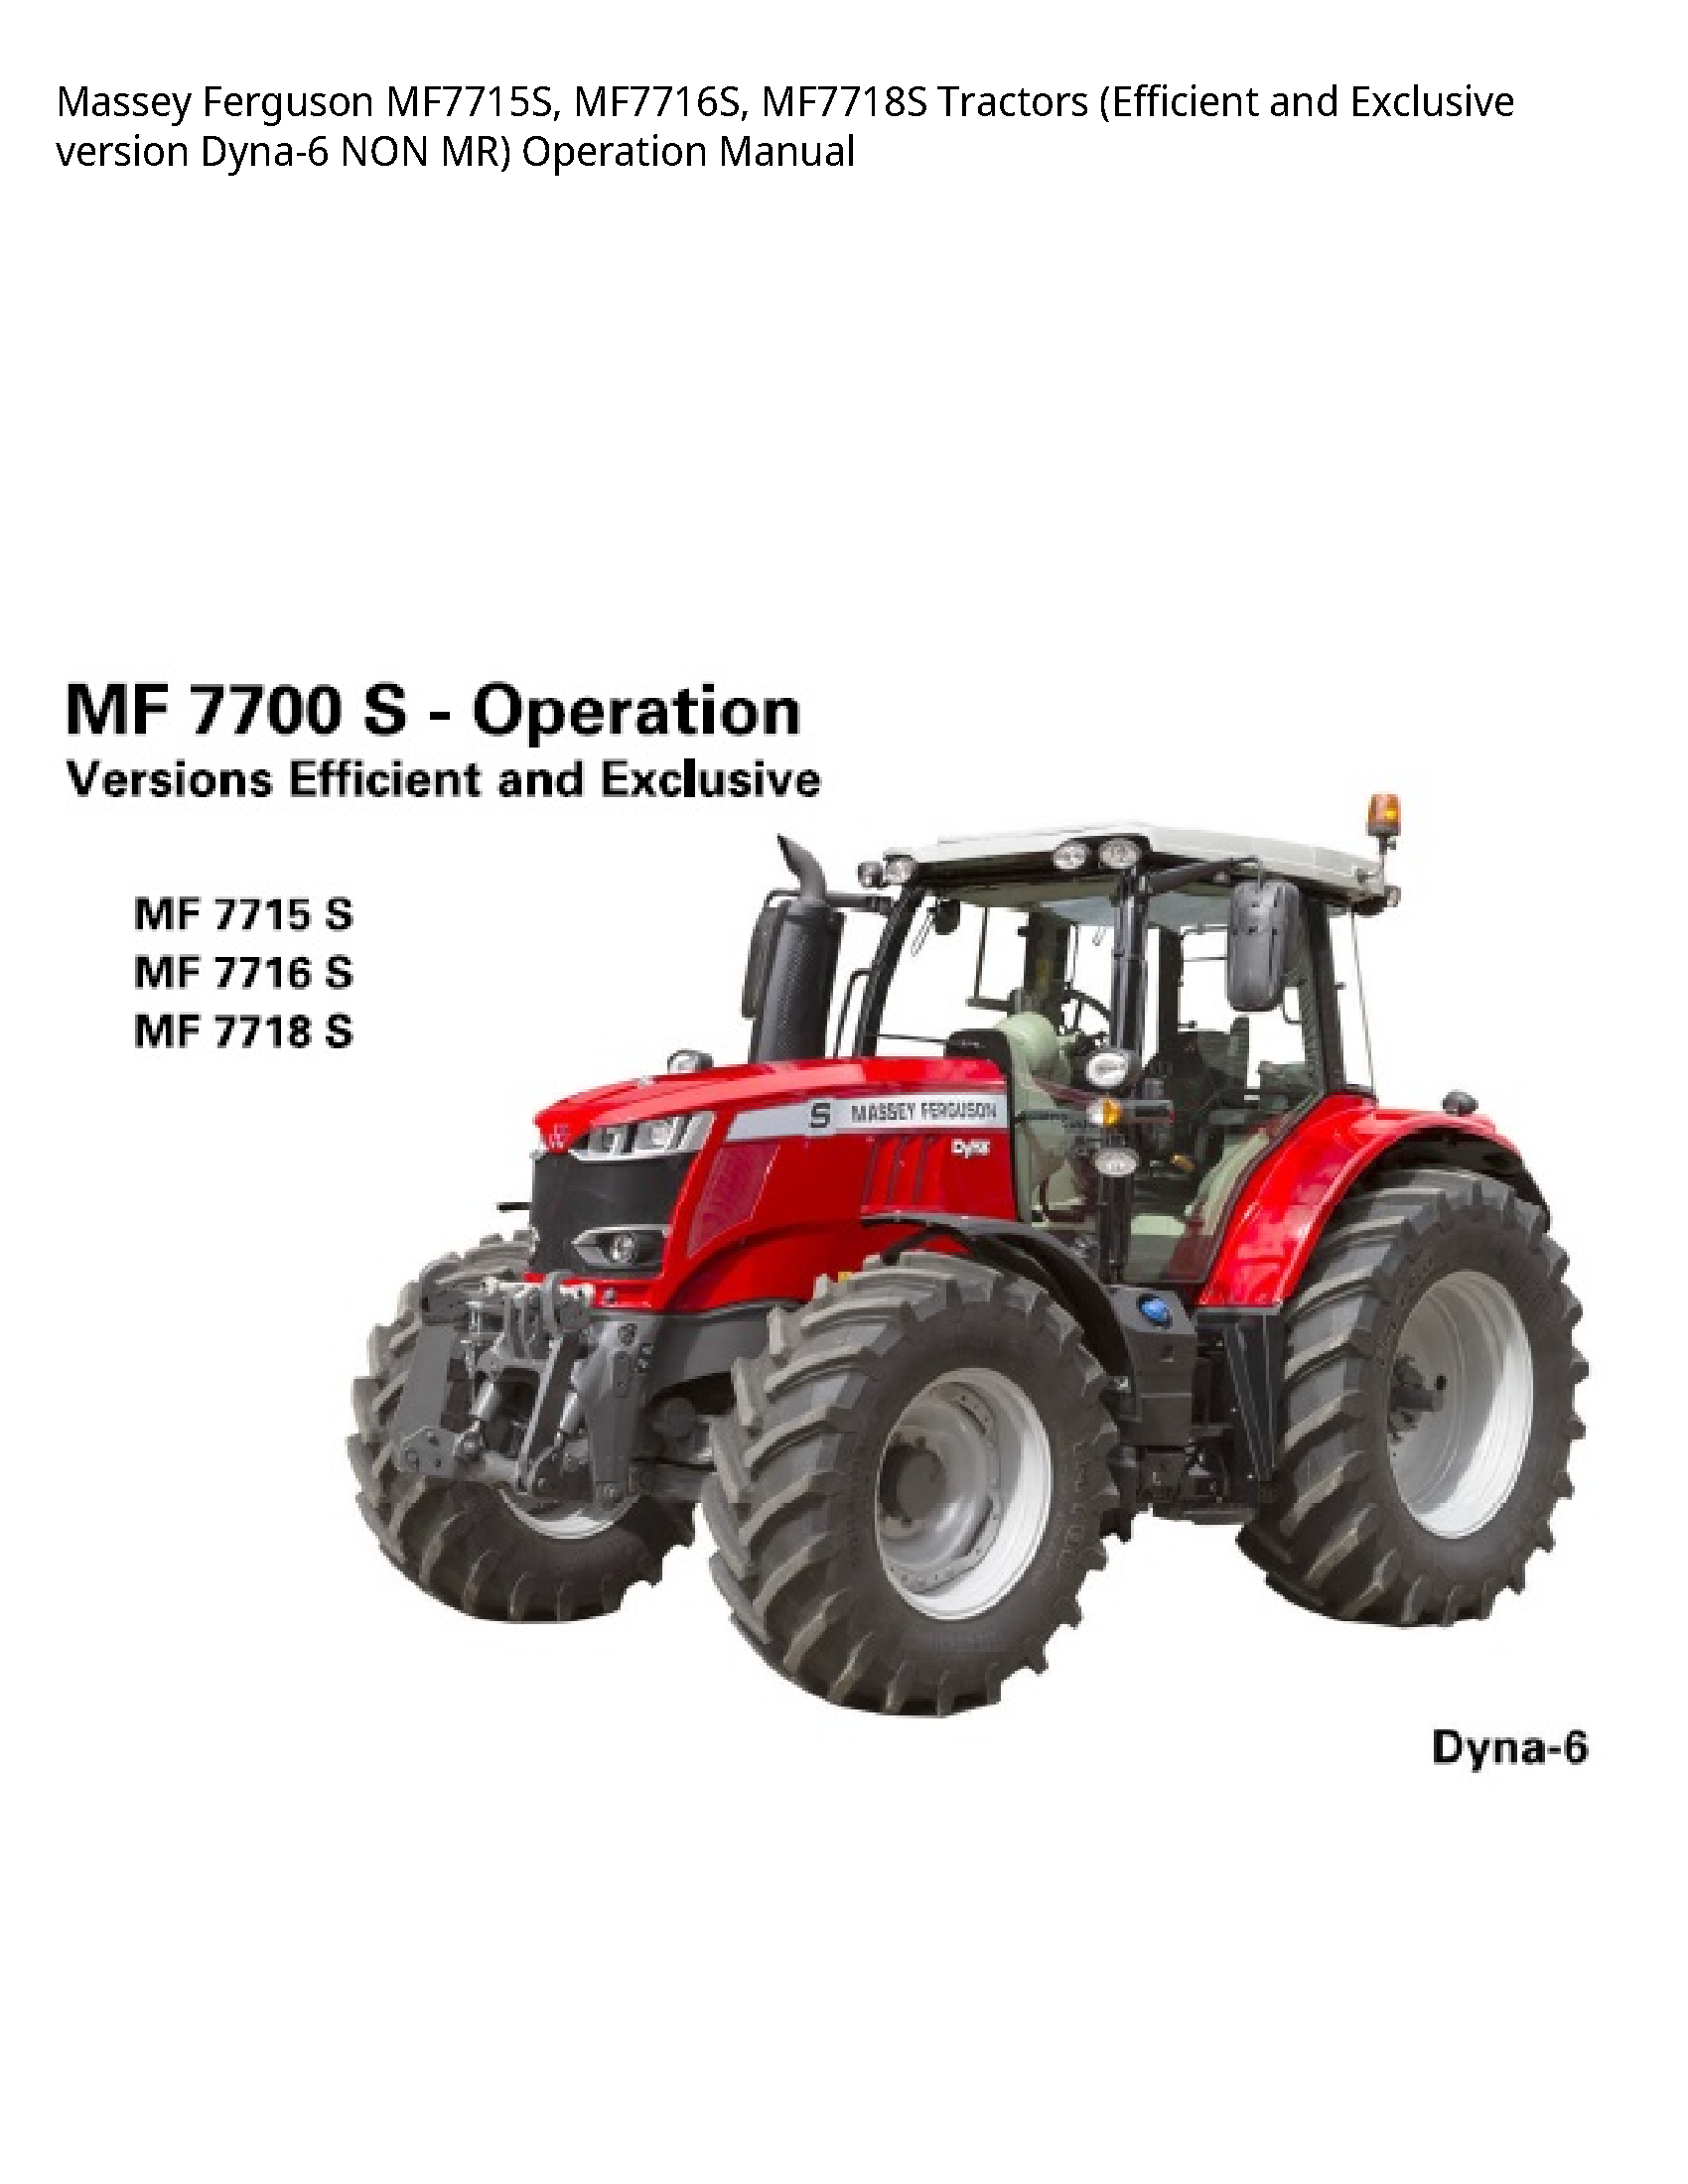 Massey Ferguson MF7715S Tractors (Efficient  Exclusive version NON MR) Operation manual